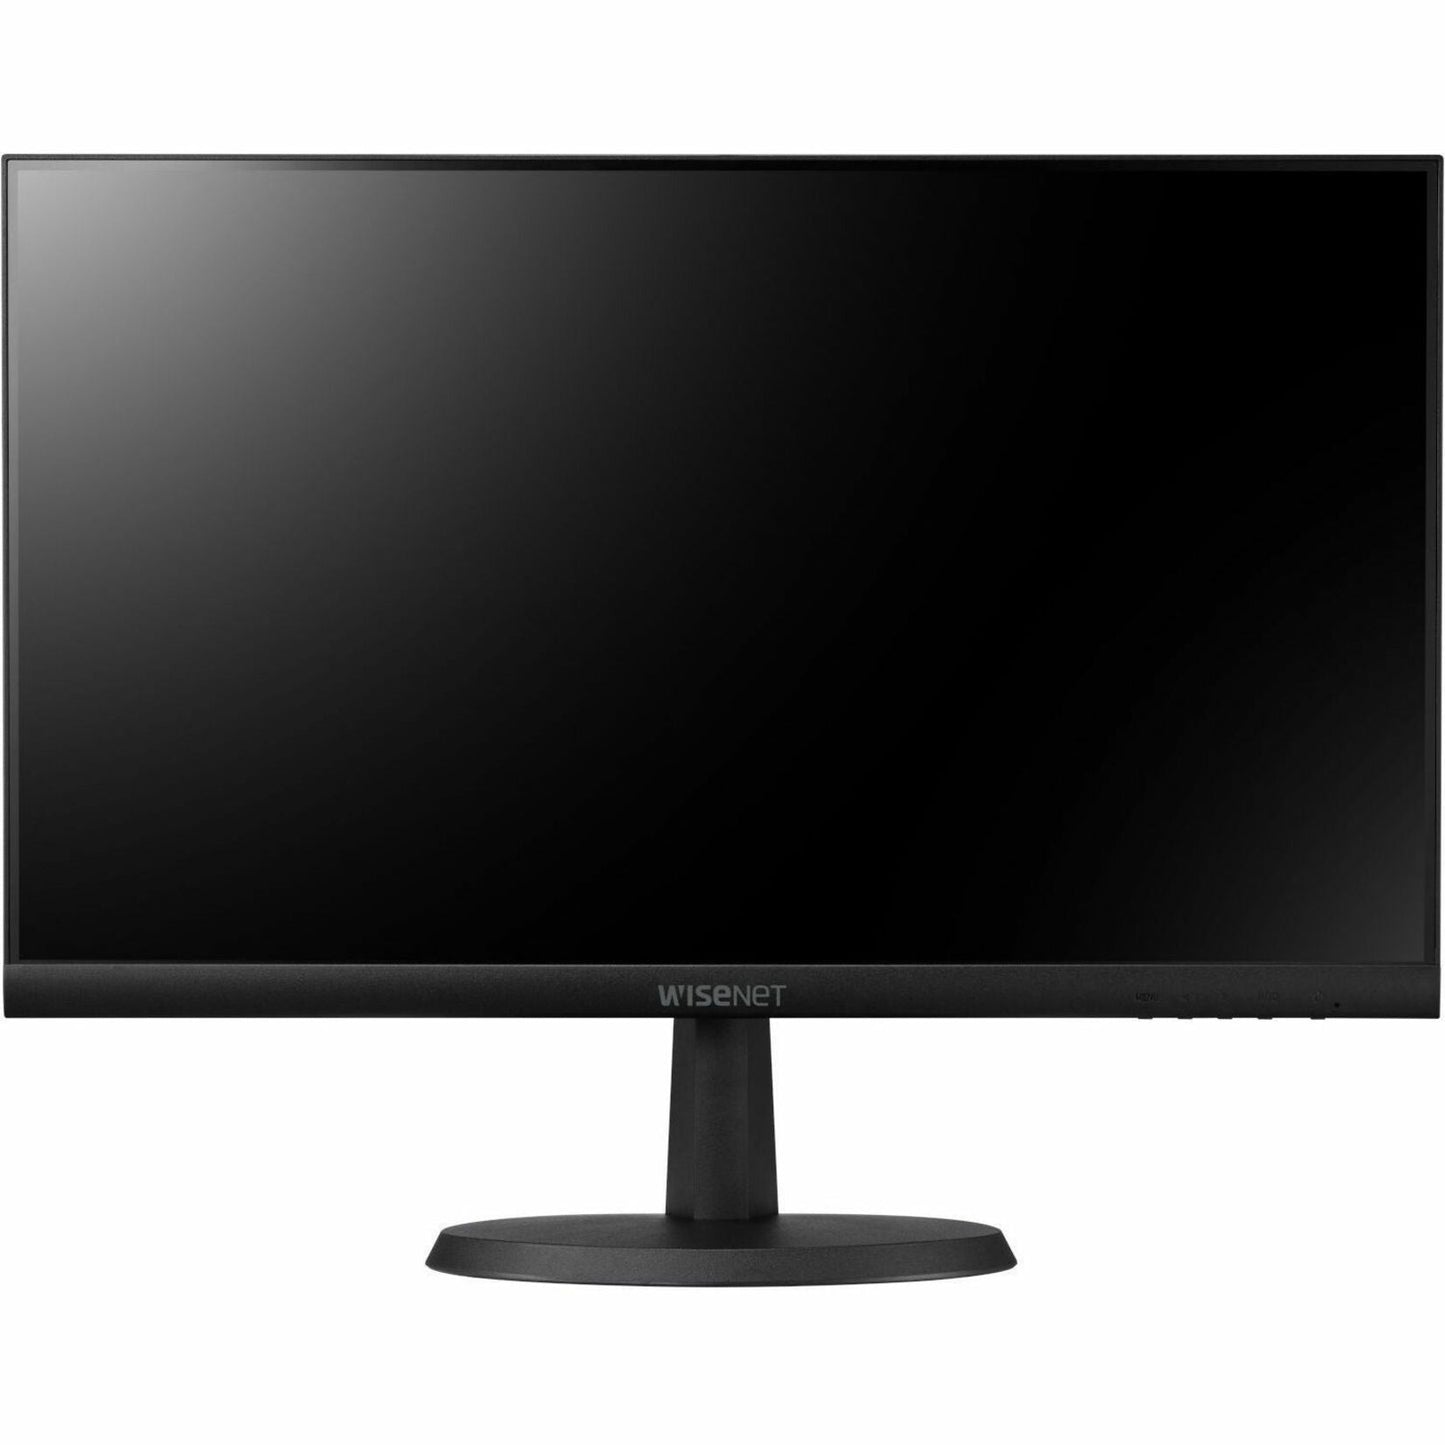 Hanwha SMT-2431 23.8" Full HD LED Monitor - 16:9 - Black